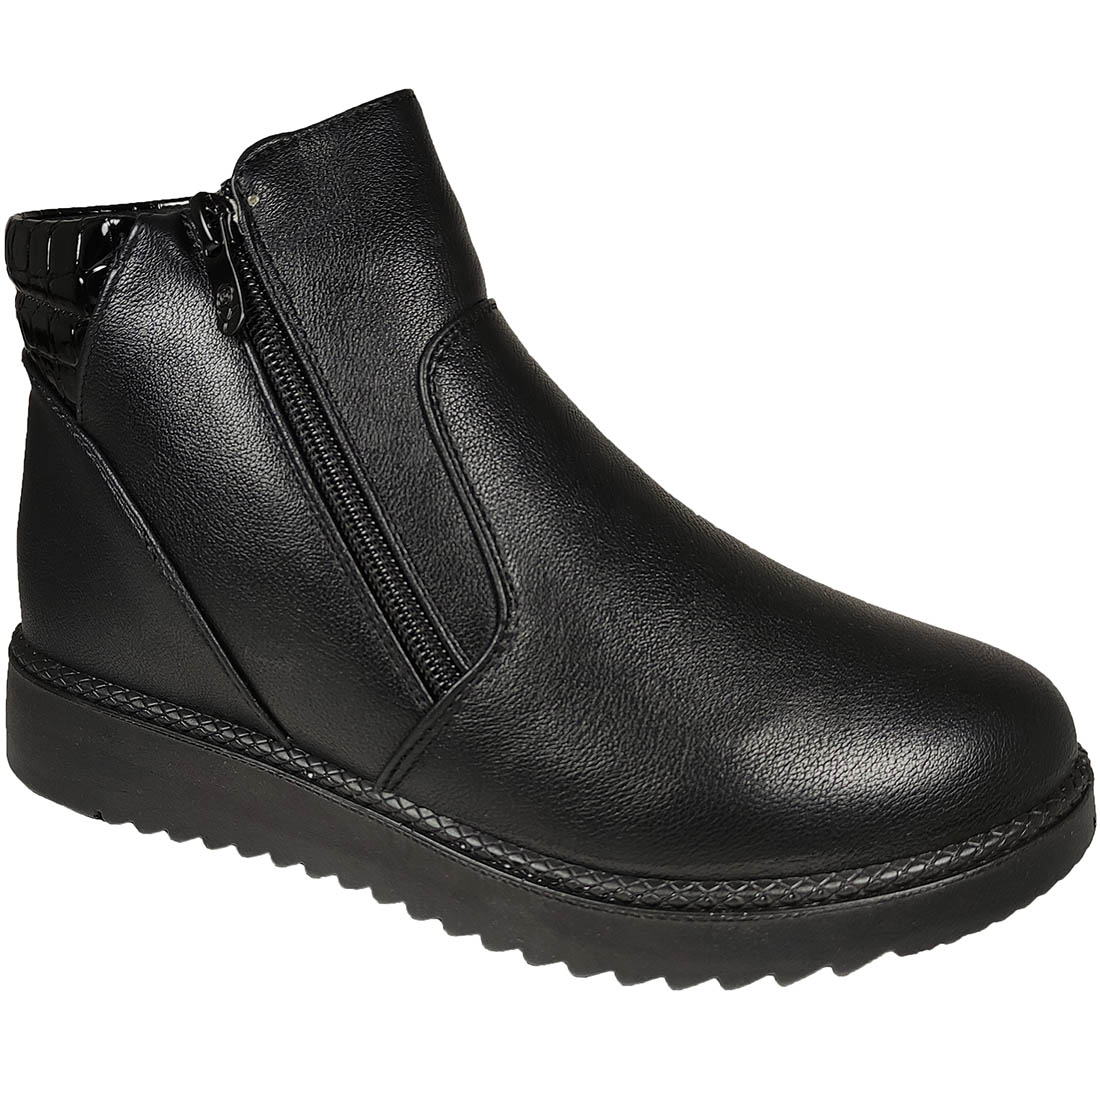 Womens Boots Plato H813-1 Black